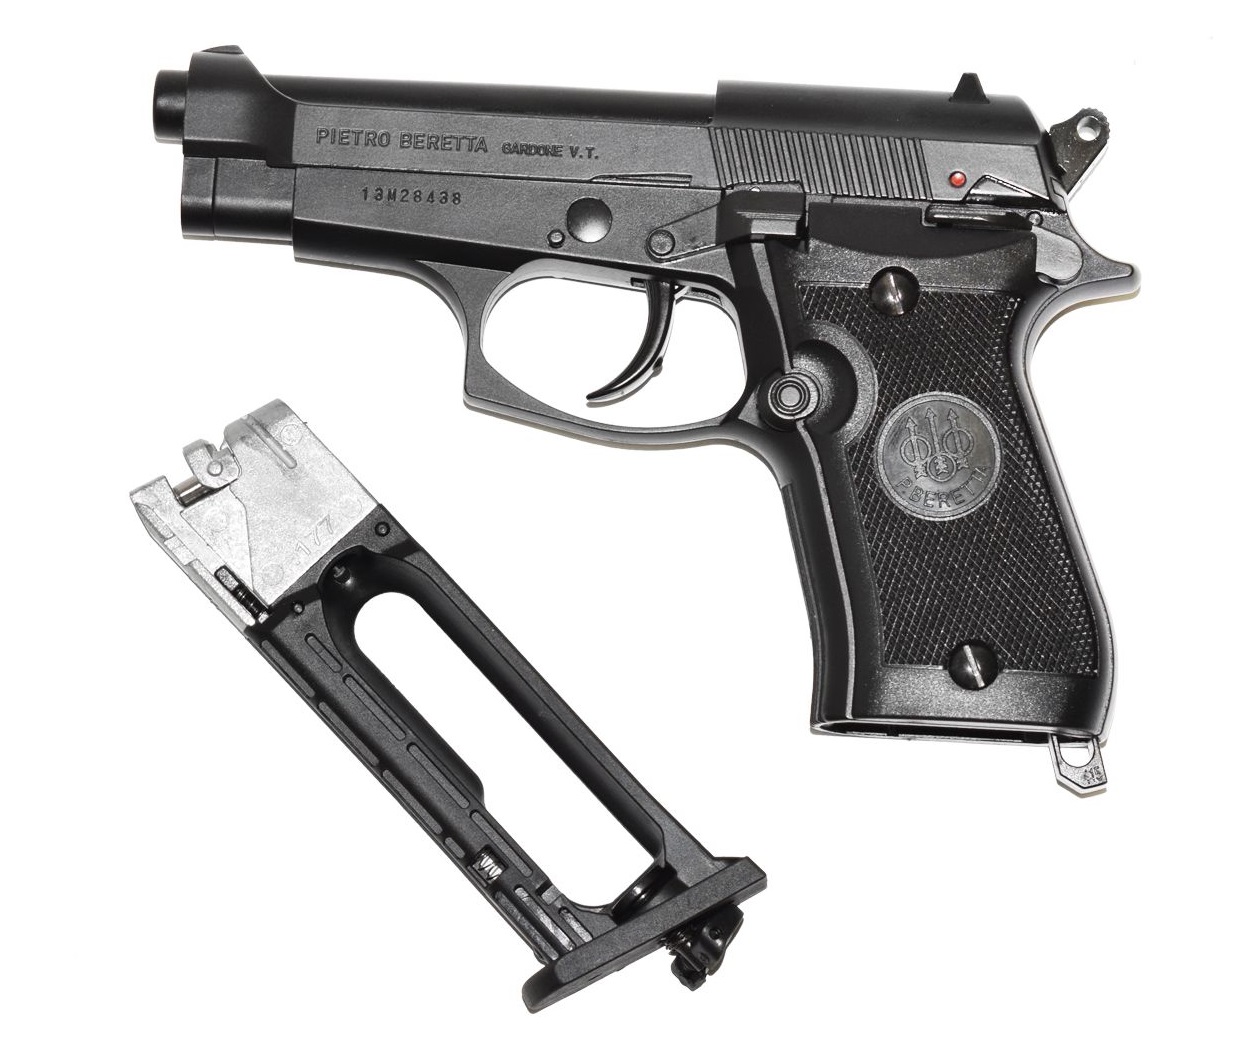 Пневматический пистолет Umarex Beretta M84 FS (beretta) 4,5 мм